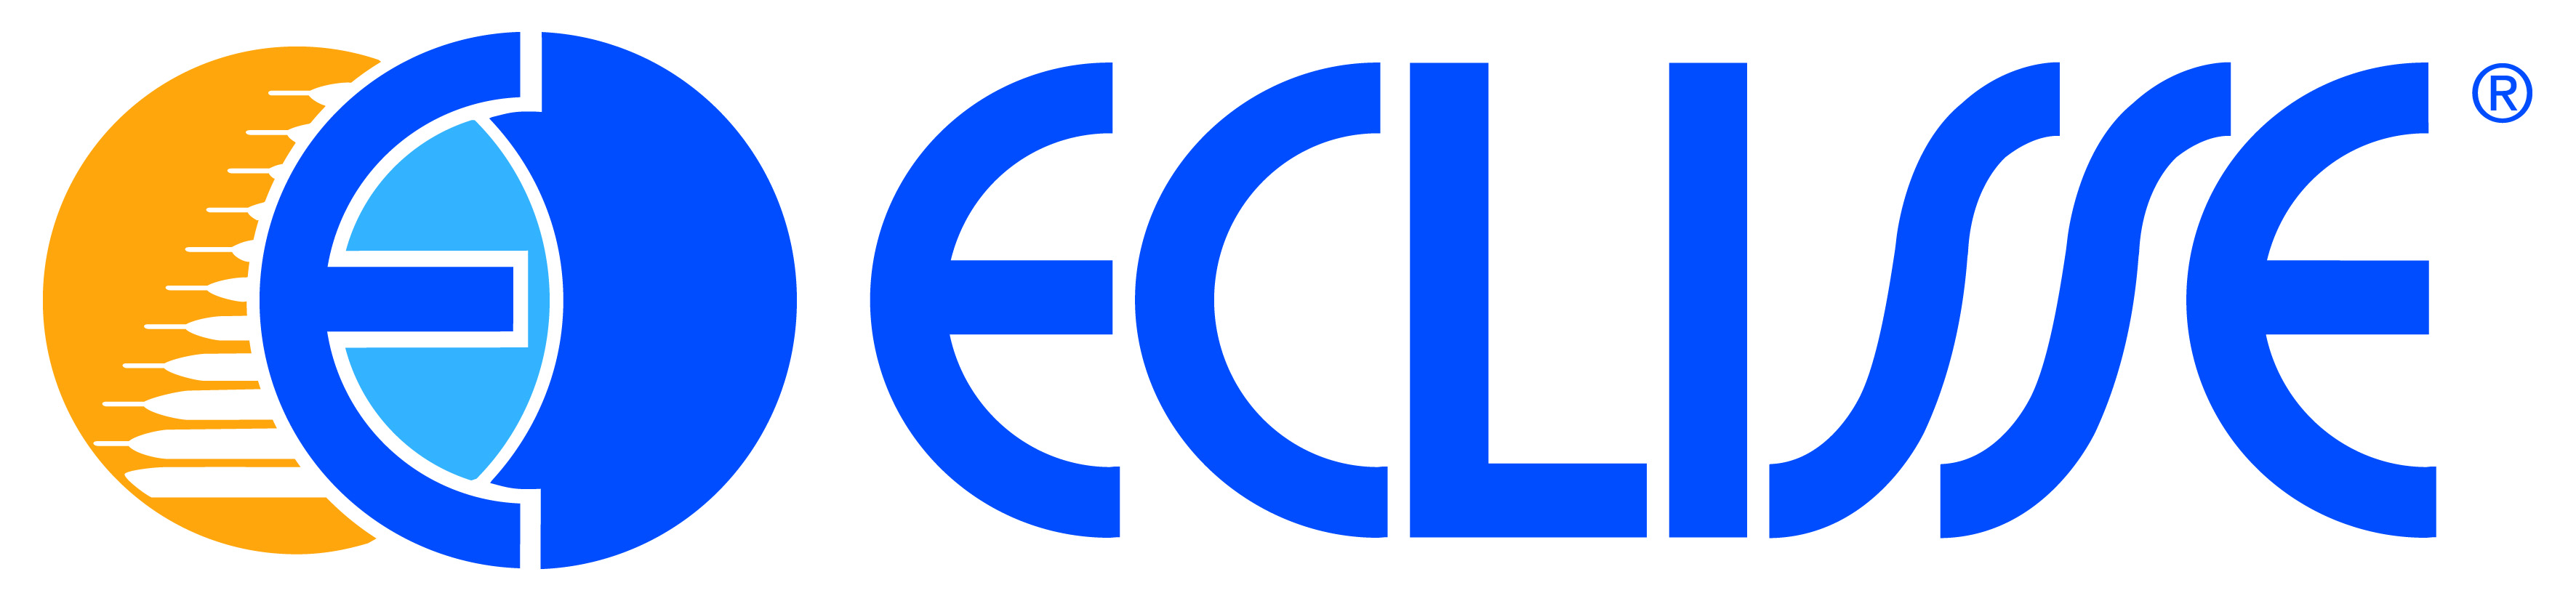 ECLISSE logo